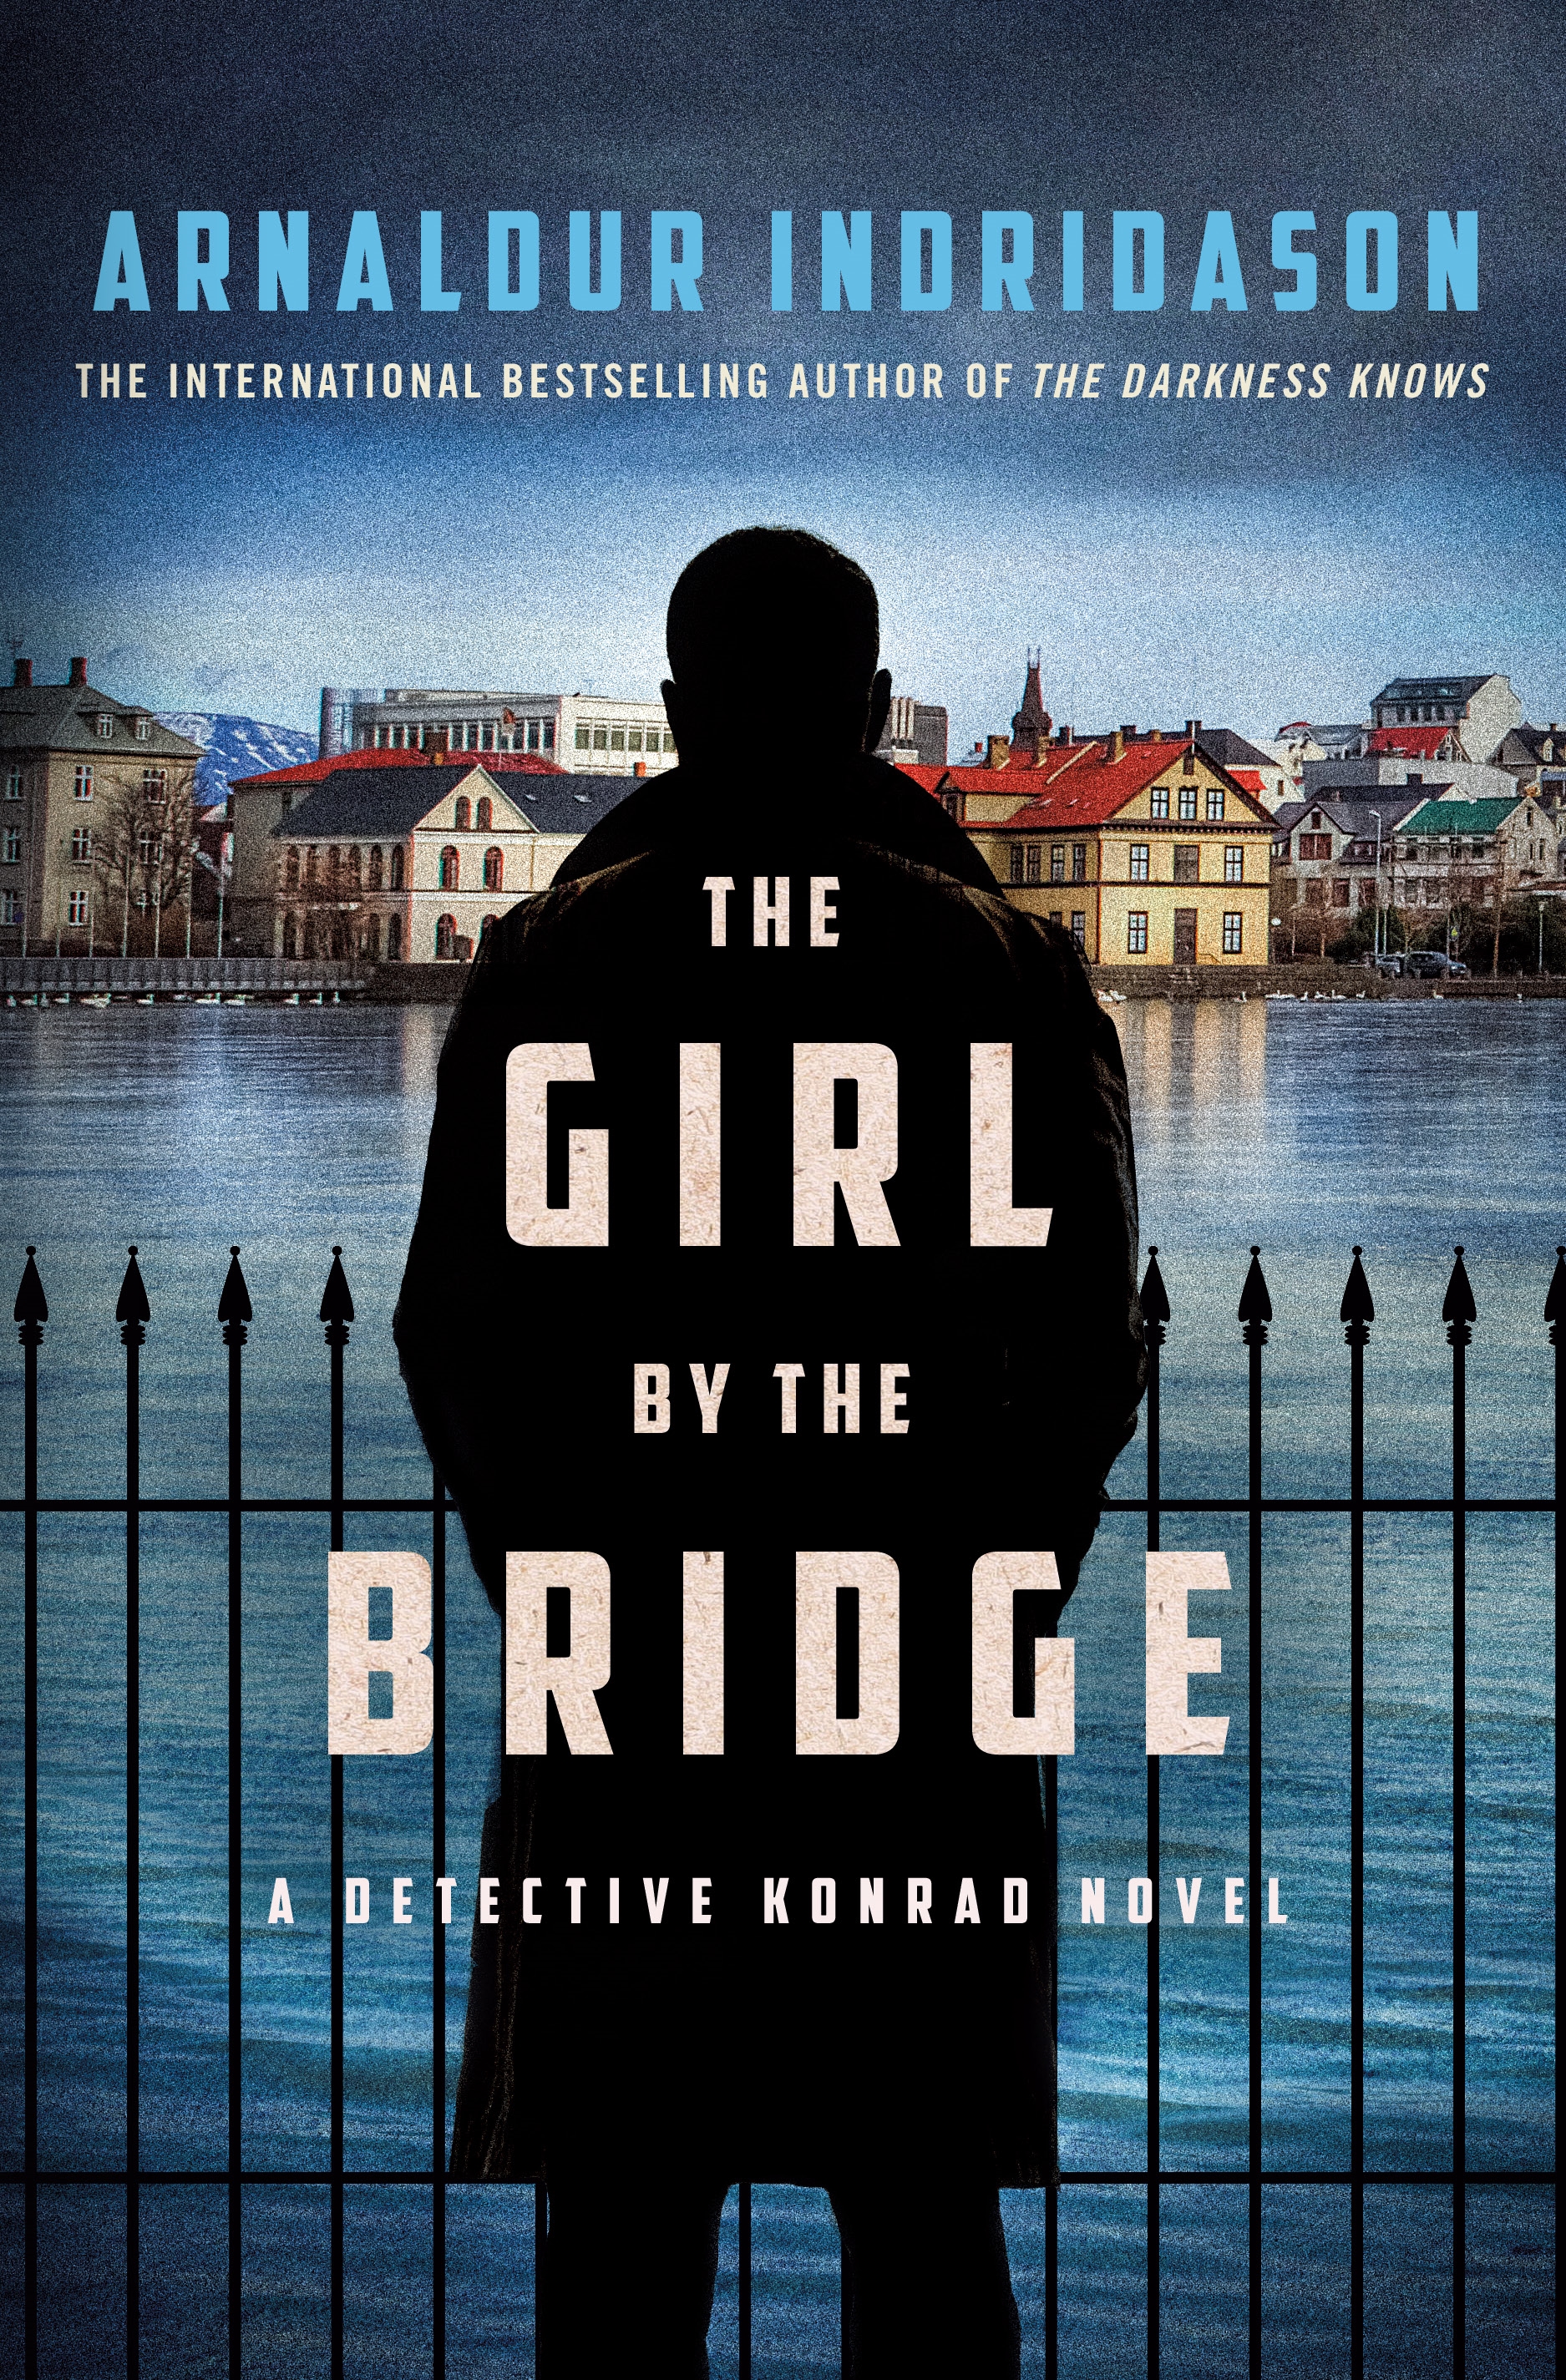 The Girl by the Bridge A Detective Konrad Novel cover image